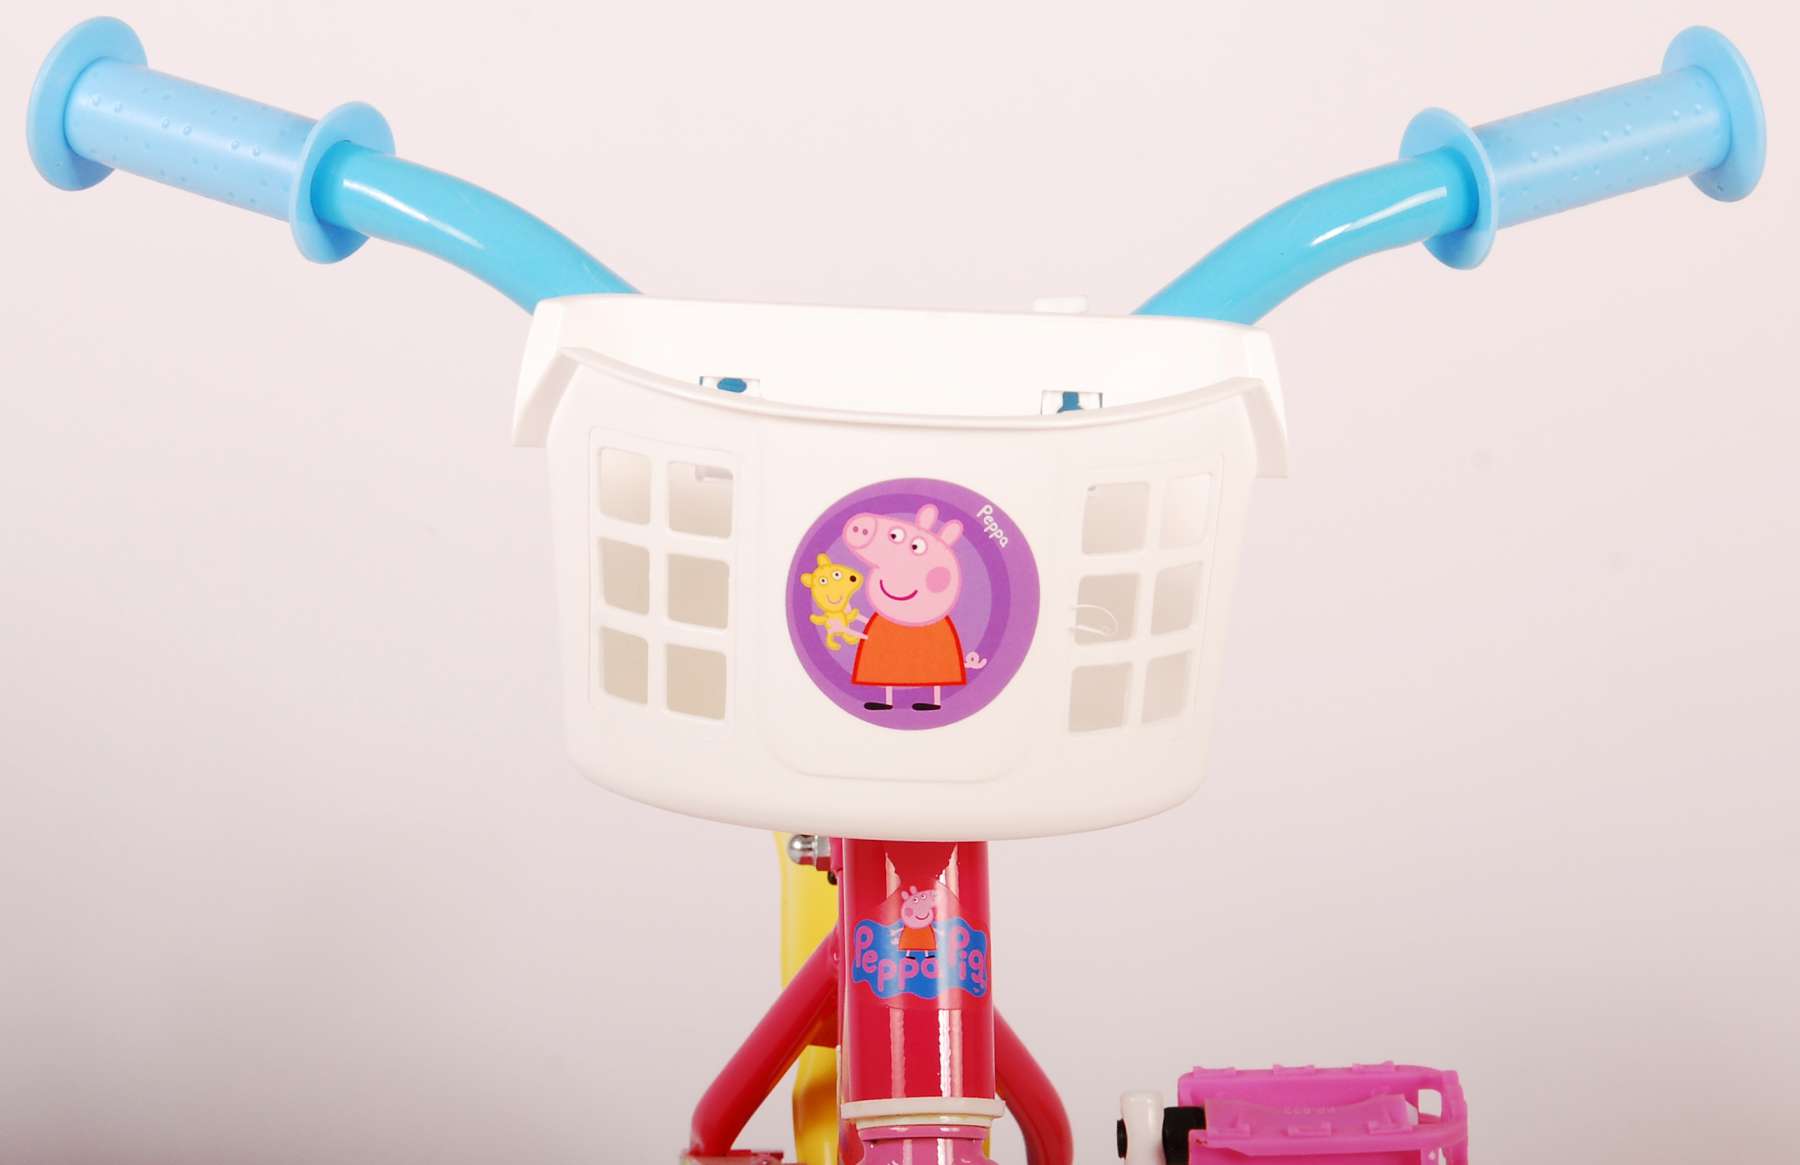 Kinderfahrrad Peppa Pig Fahrrad 10 Zoll Kinderrad in Pink / Blau